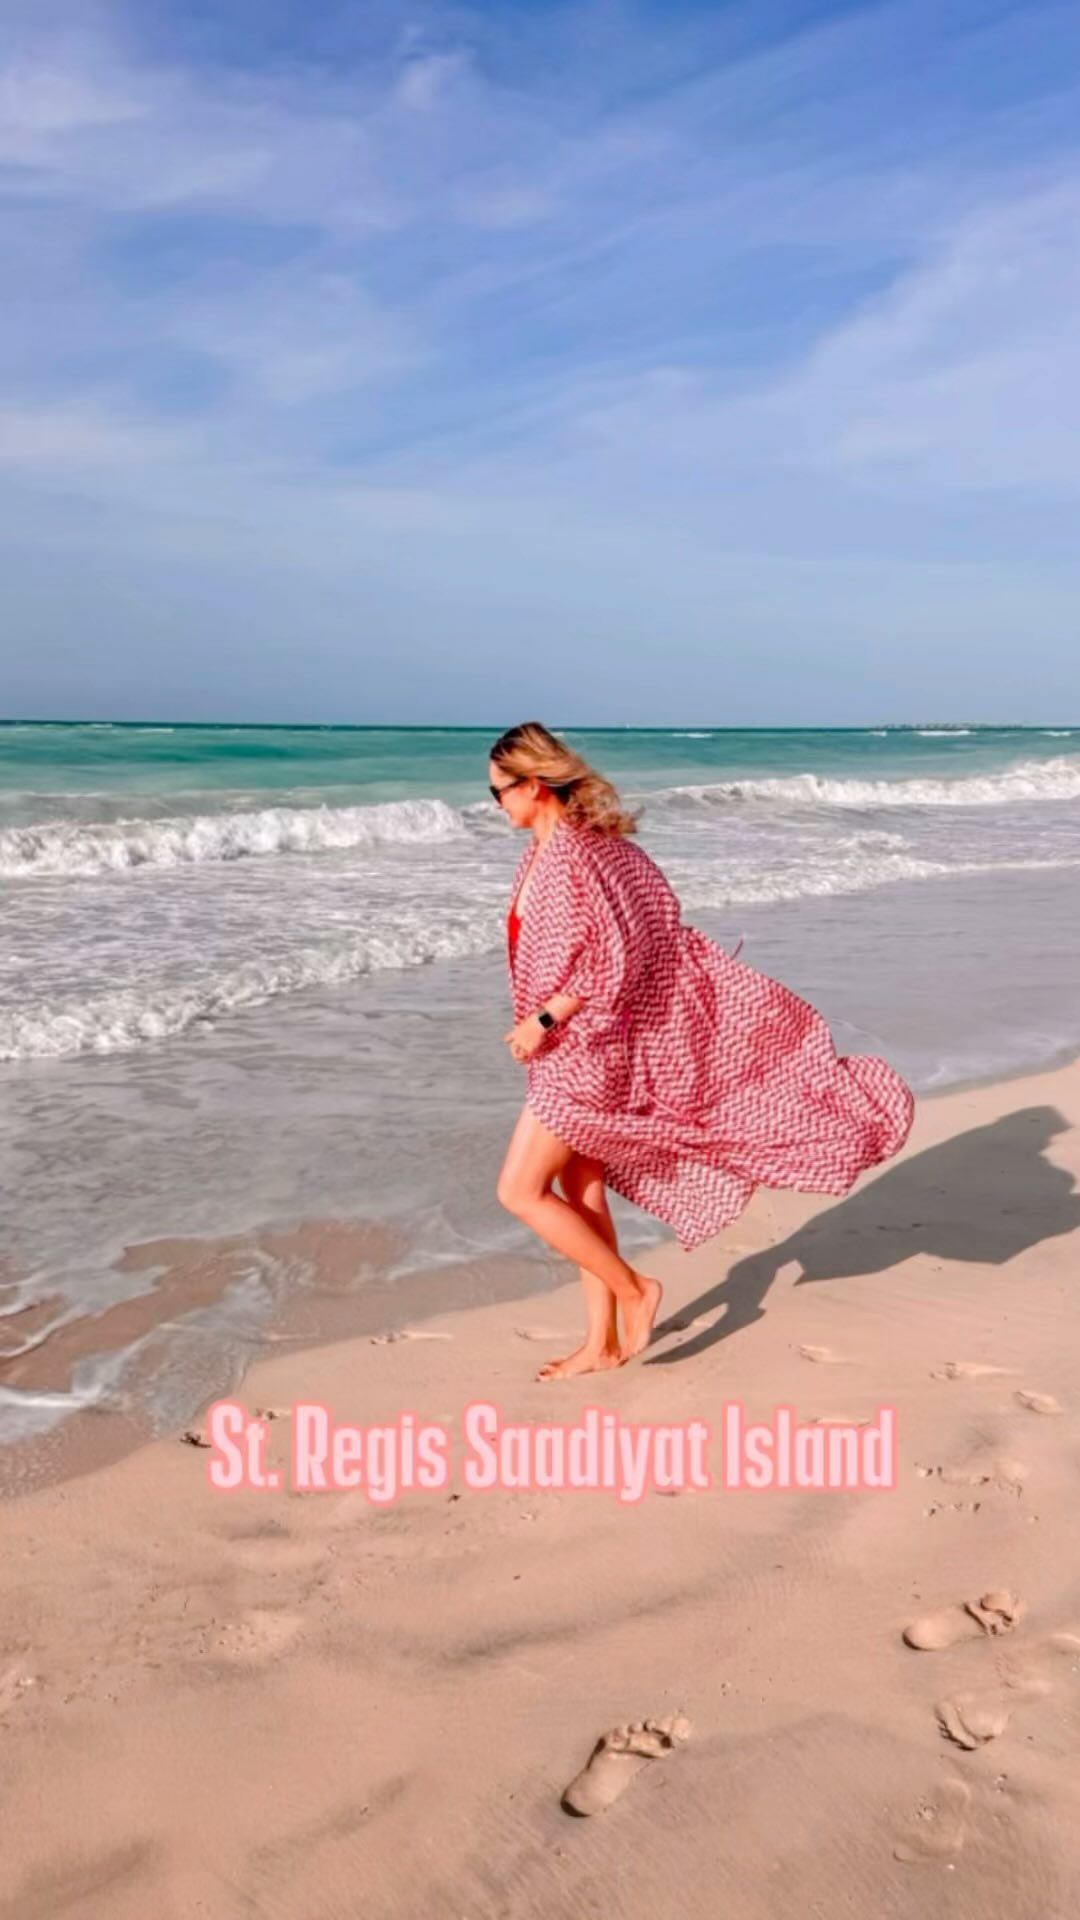 I’ve discovered paradise on Earth in the UAE 😍 
The most beautiful beaches await on Saadiyat Island in Abu Dhabi! 🌴 Powder-like sand, azure waters of the Persian Gulf – it’s a true haven. 
One of my favorite hotel is @stregissaadiyatisland where luxury meets impeccable service. It’s the perfect place for unforgettable moments of relaxation and a luxurious getaway. 

.
.

#TravelGoals #SaadiyatIsland #StRegisExperience
#StRegishotels #stregissaadiyatisland #stregisabudhabisaadiyatisland #inabudhabi #travellikeagirl #abudhabilife #kobietazklasa #kobietazpasja #wearetravelgirls #girllikeme #kobiecafotoszkoła #womanpassion #gogogirls #polishgirl #polishwoman #travelphotography  #matkafotografka #polkinaobczyznie #polkawemiratach #wakacjewemiratach #wakacje2024 #okiemmamy #polkawabudhabi #abudhabiphotography